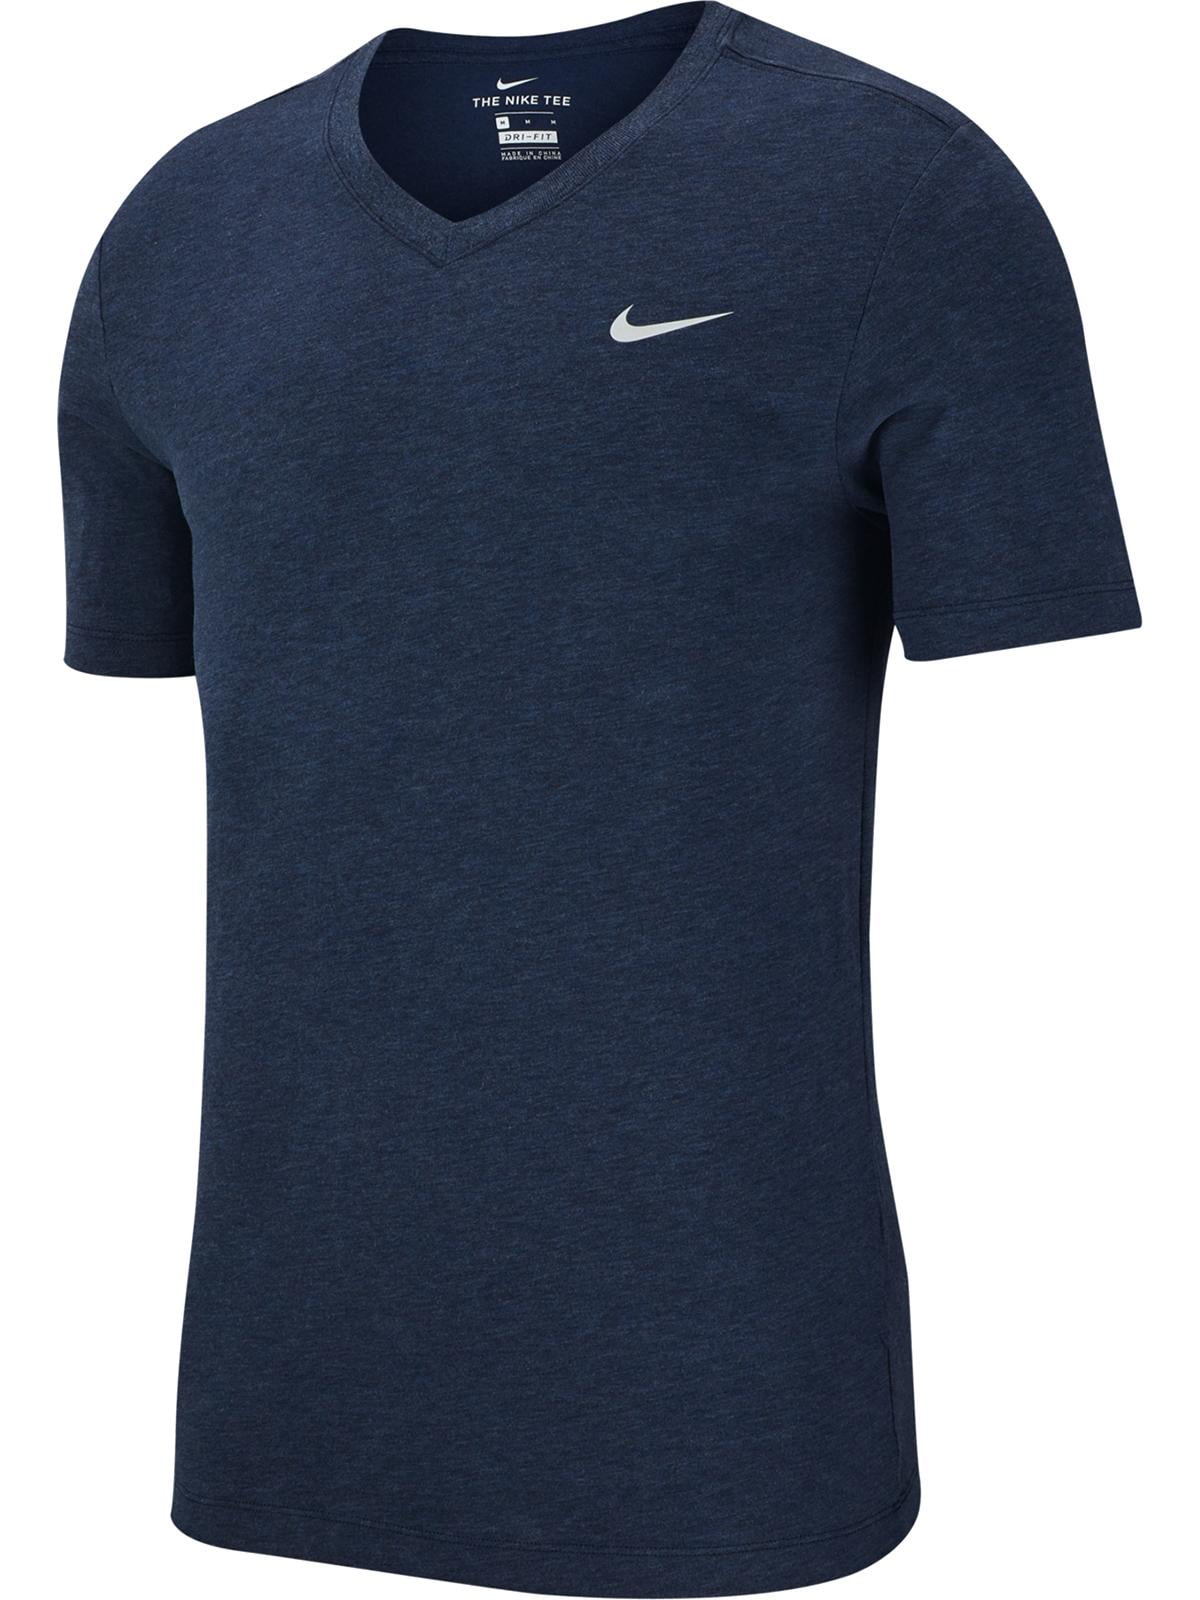 Nike Mens Training Workout T-Shirt 